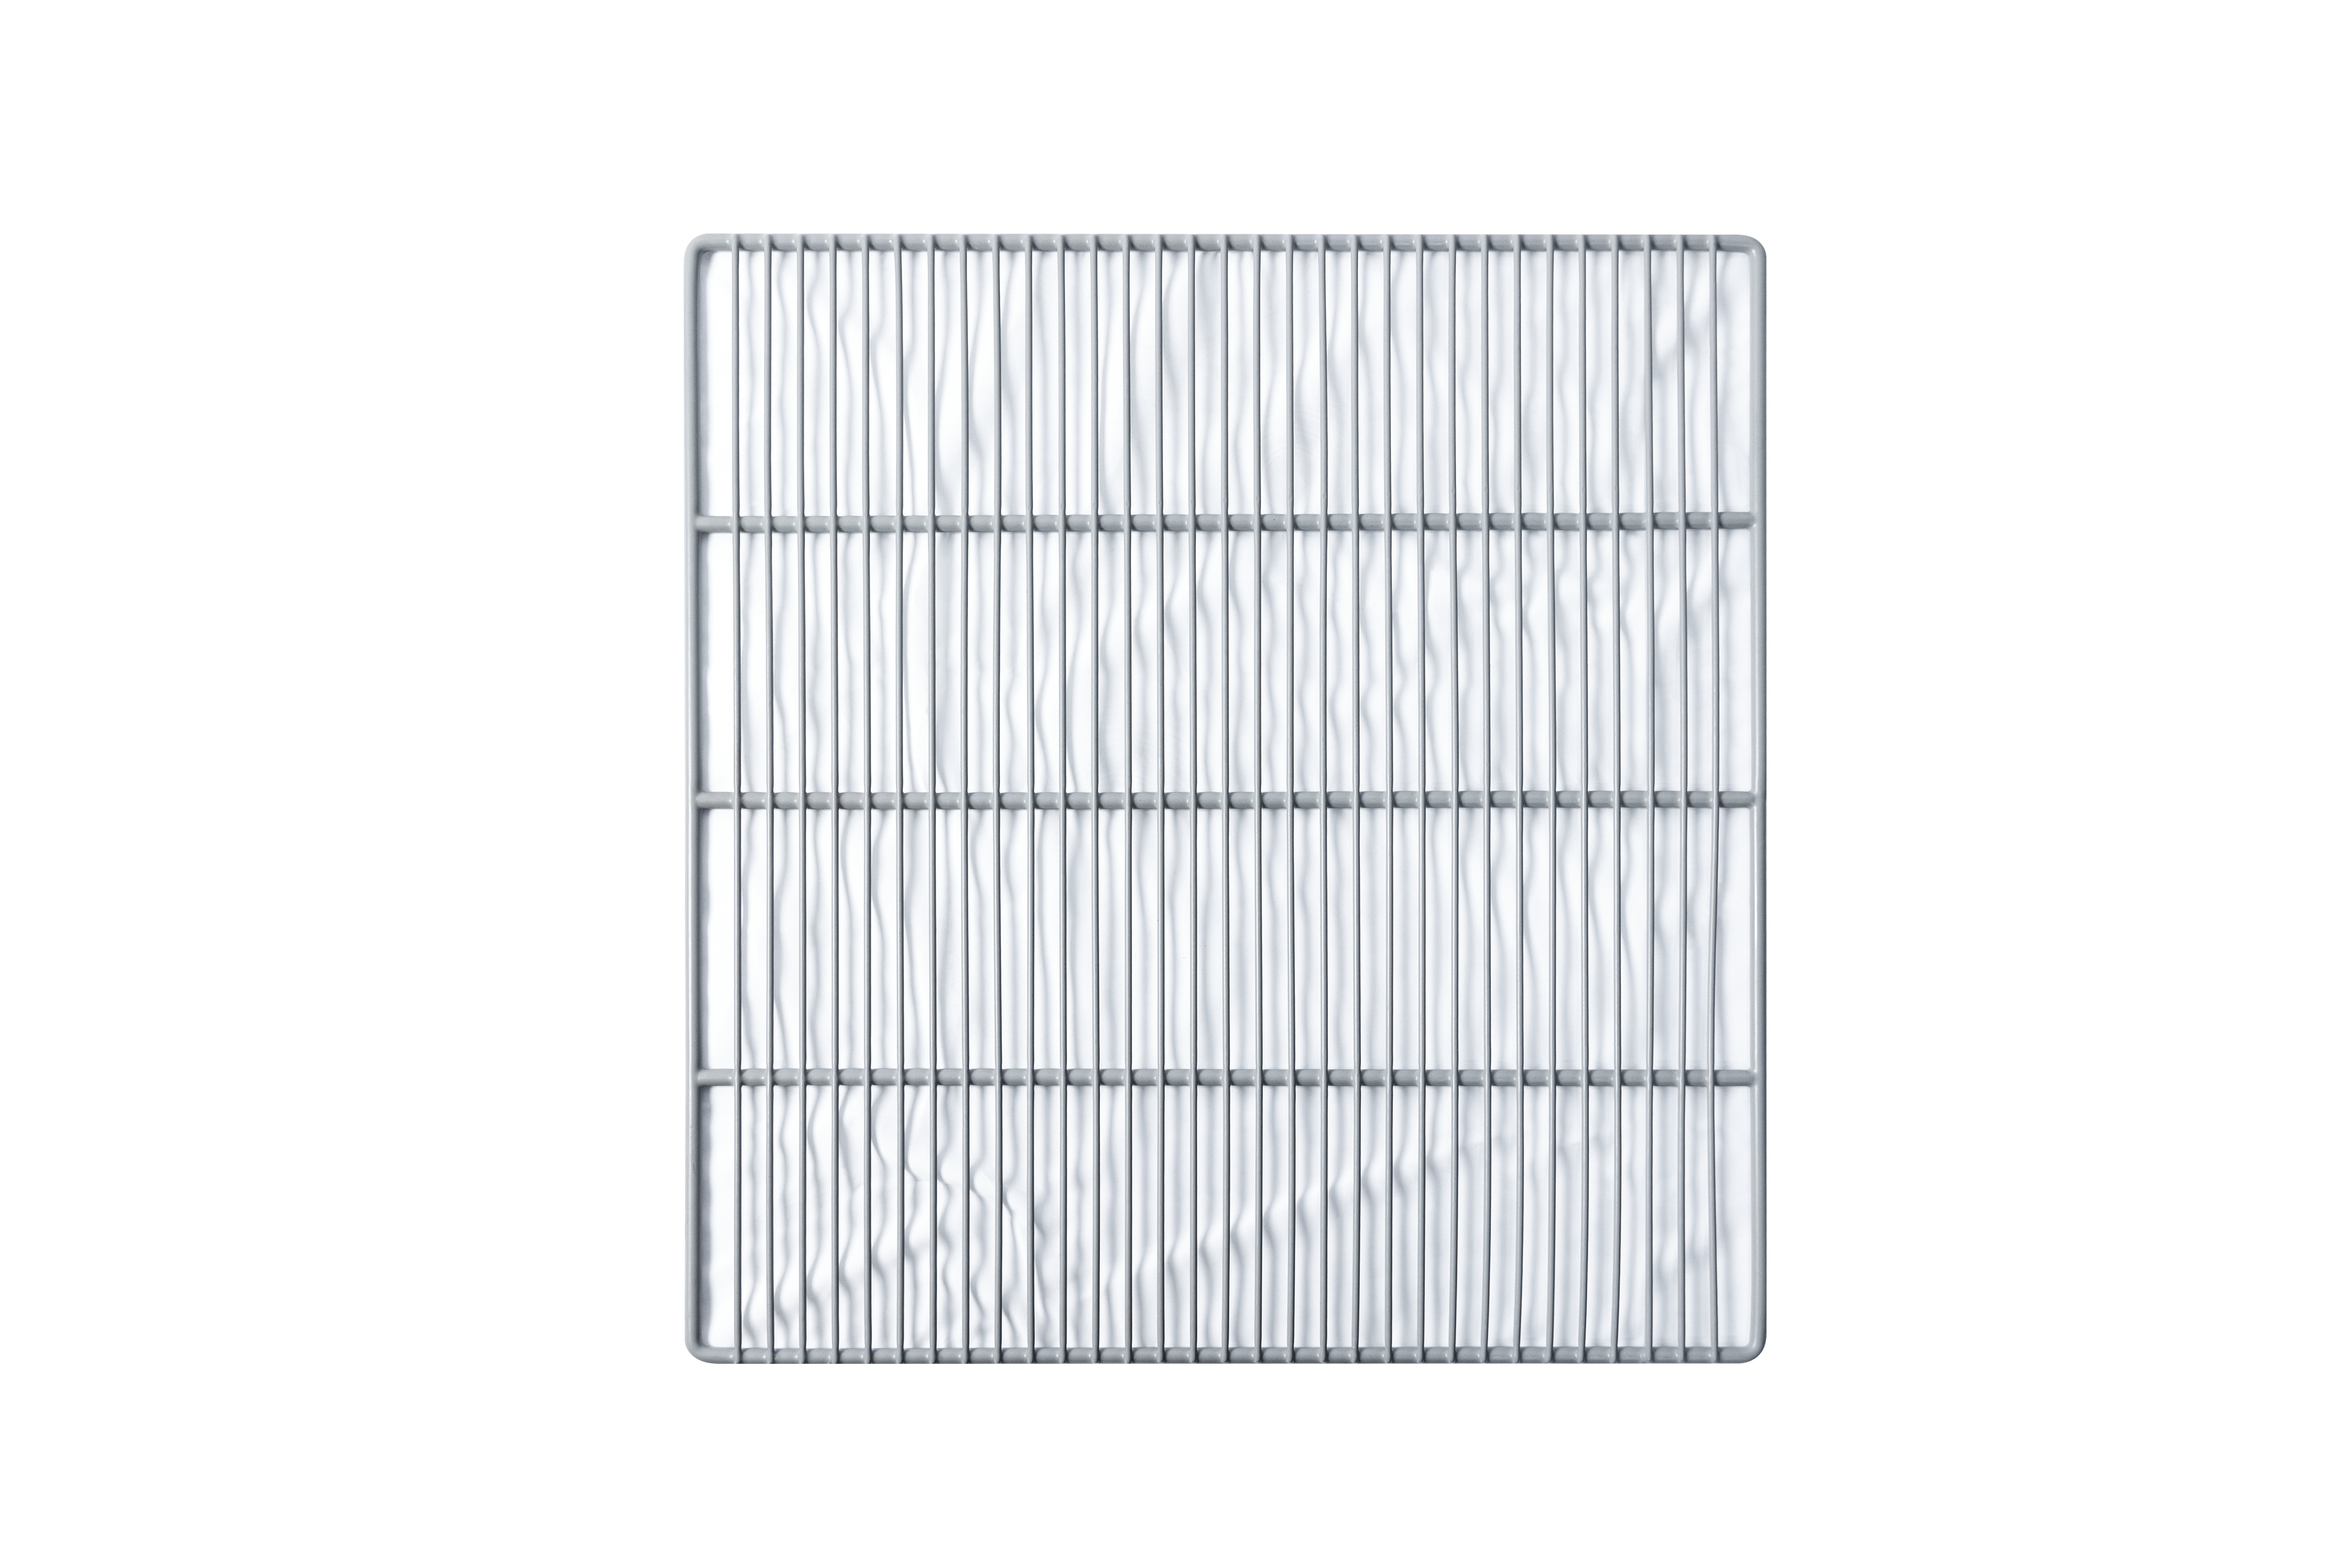 Adjustable Epoxy-coated Wire Shelf for TPP67- Enhance Organization with Sturdy Utility Shelf - (Gray) Commercial Refrigerator Shelf Set of 1